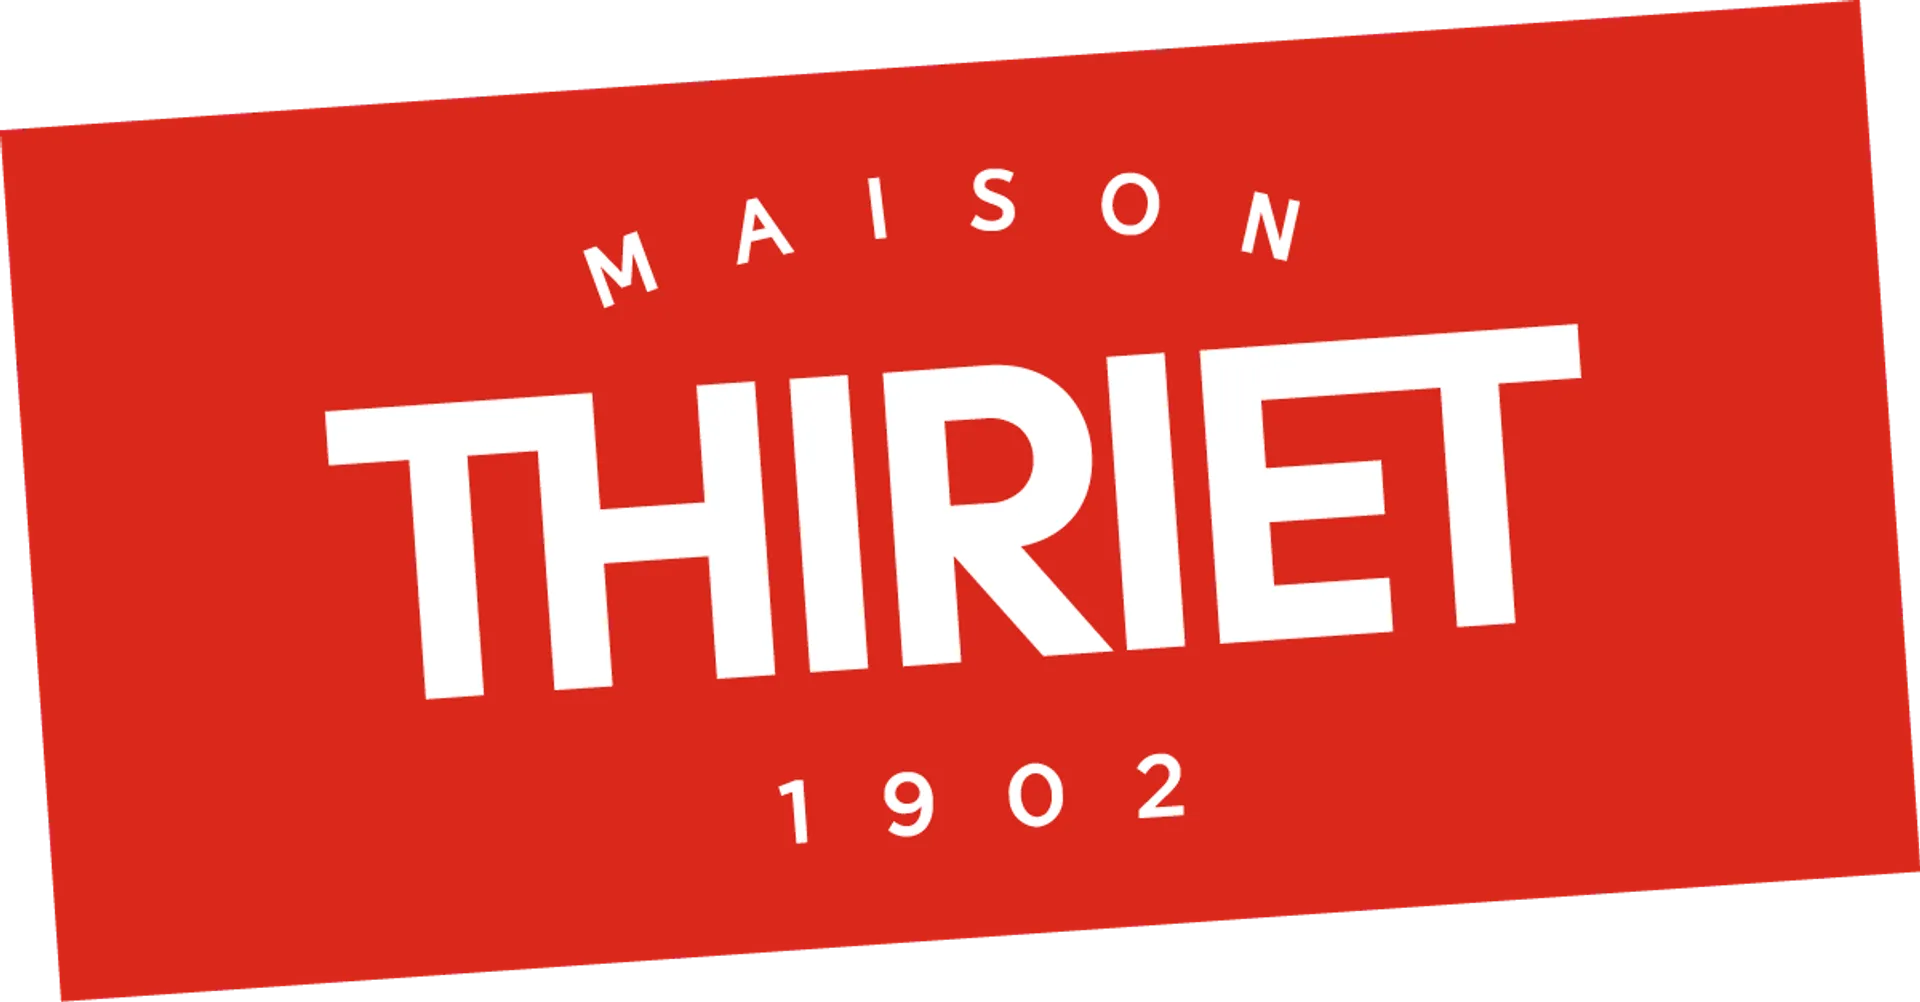 THIRIET logo